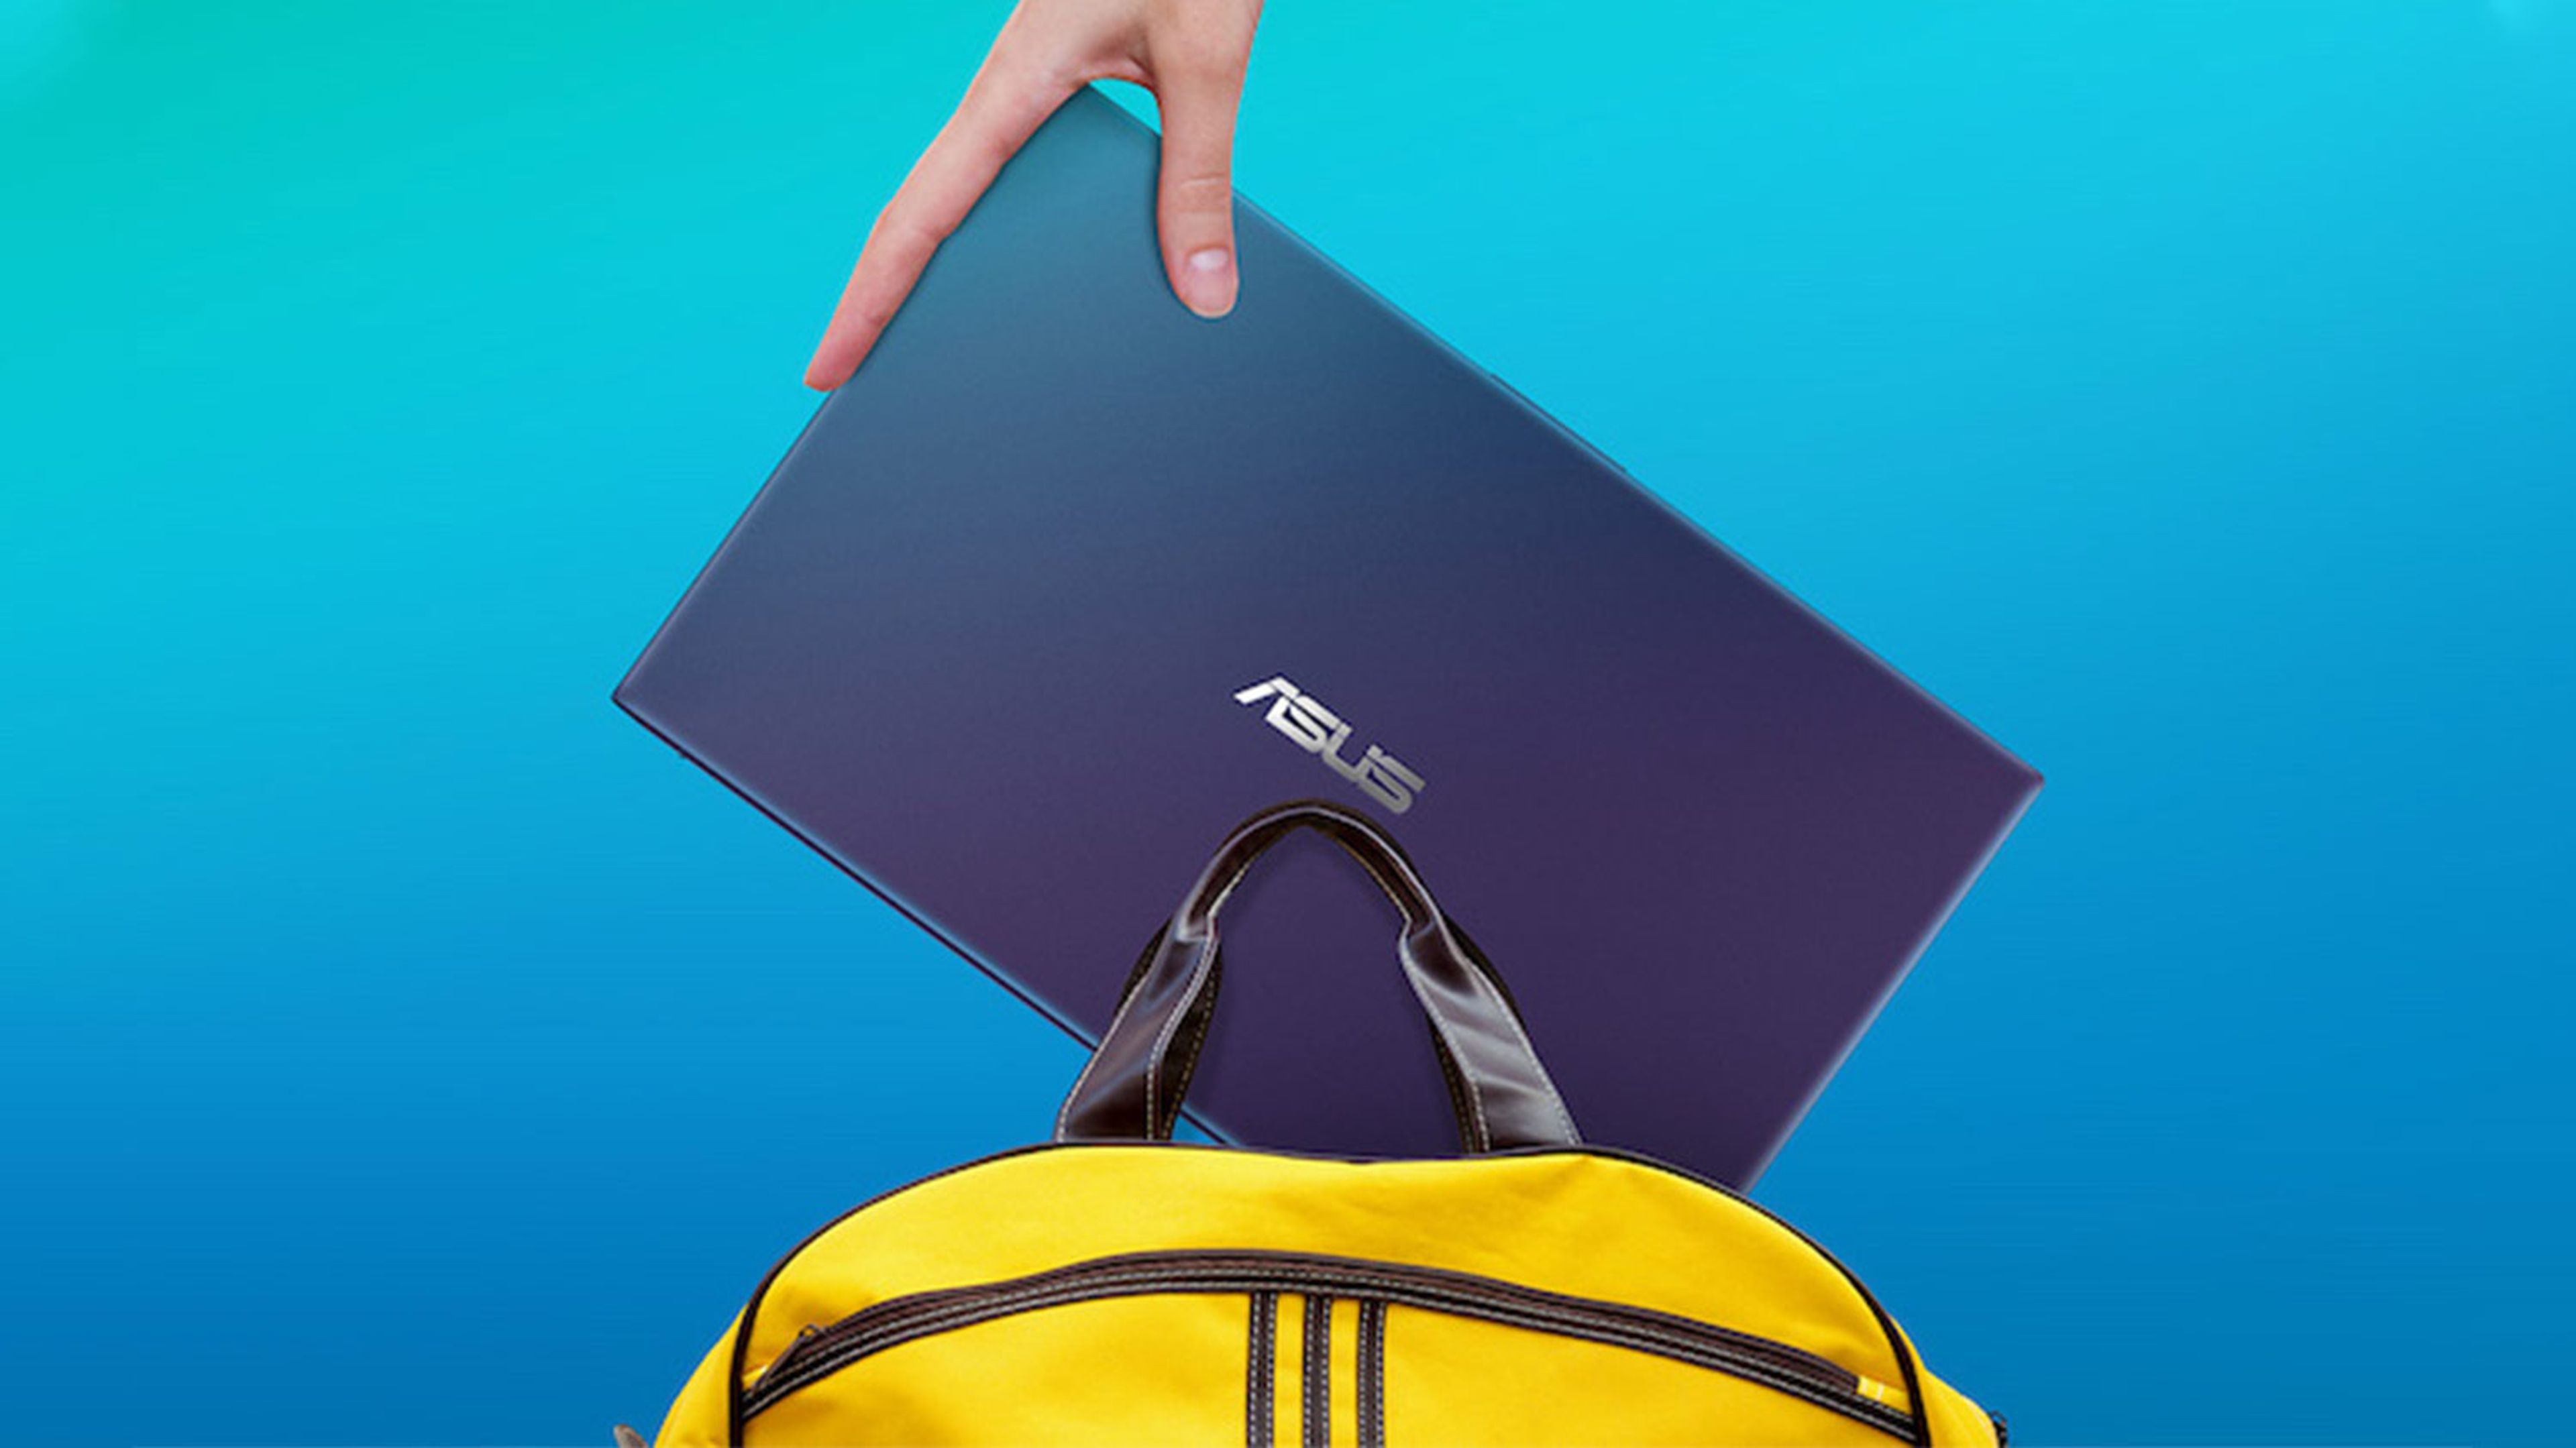 Asus VivoBook S15: mejor portátil para estudiantes